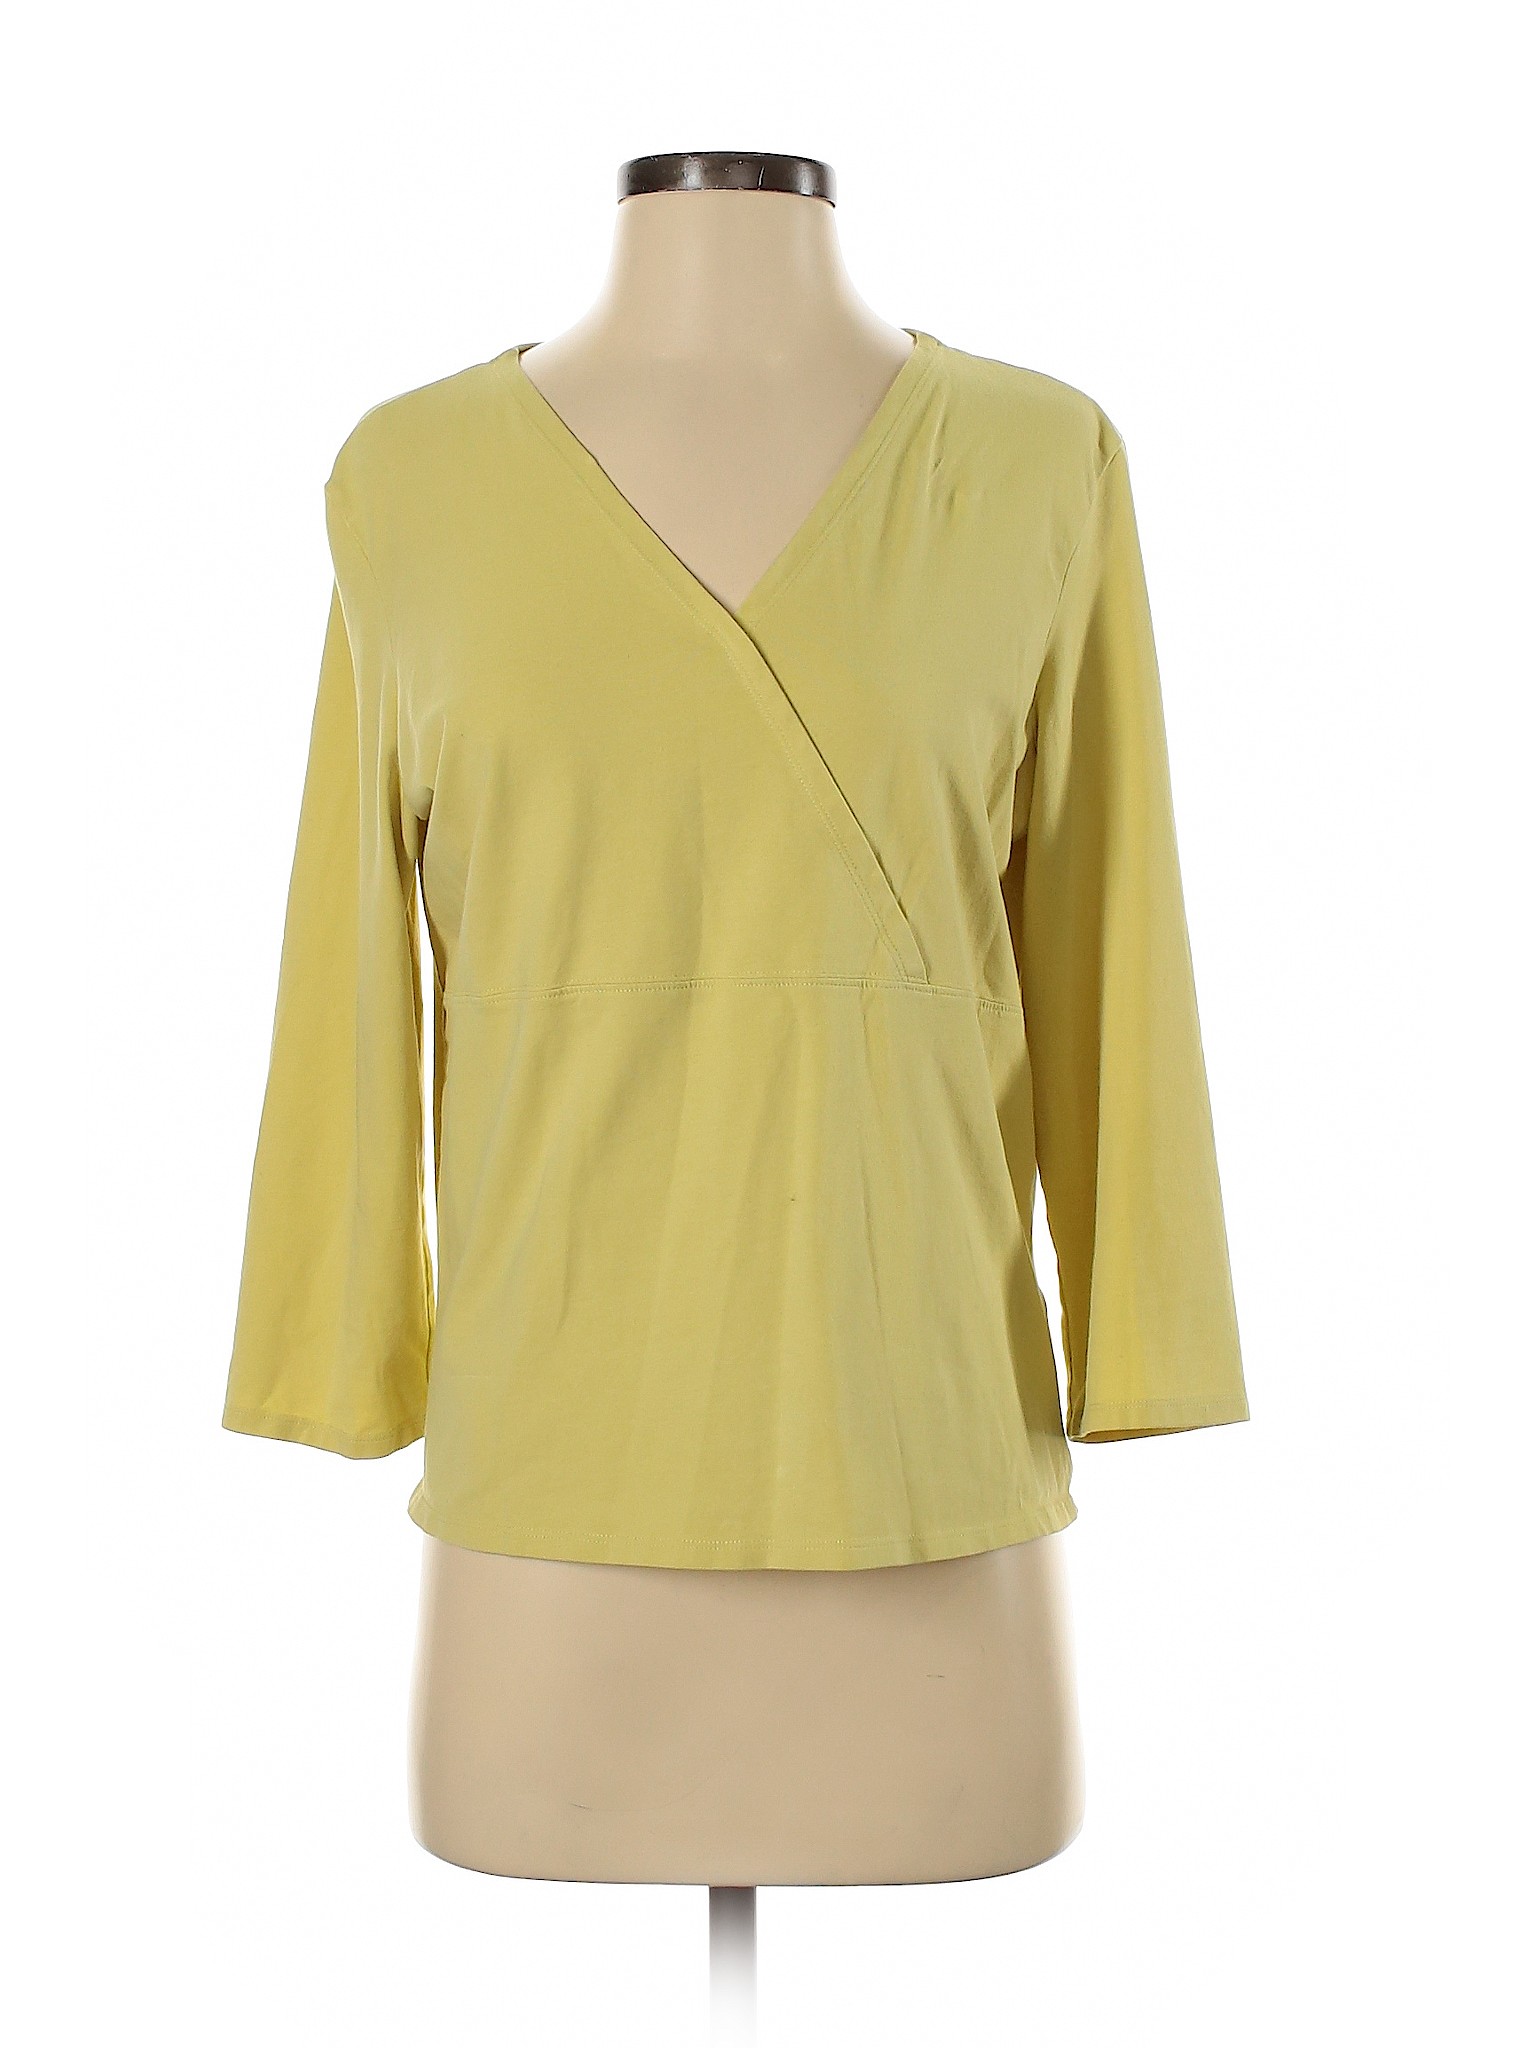 J.jill Women Yellow 3/4 Sleeve Blouse M | eBay